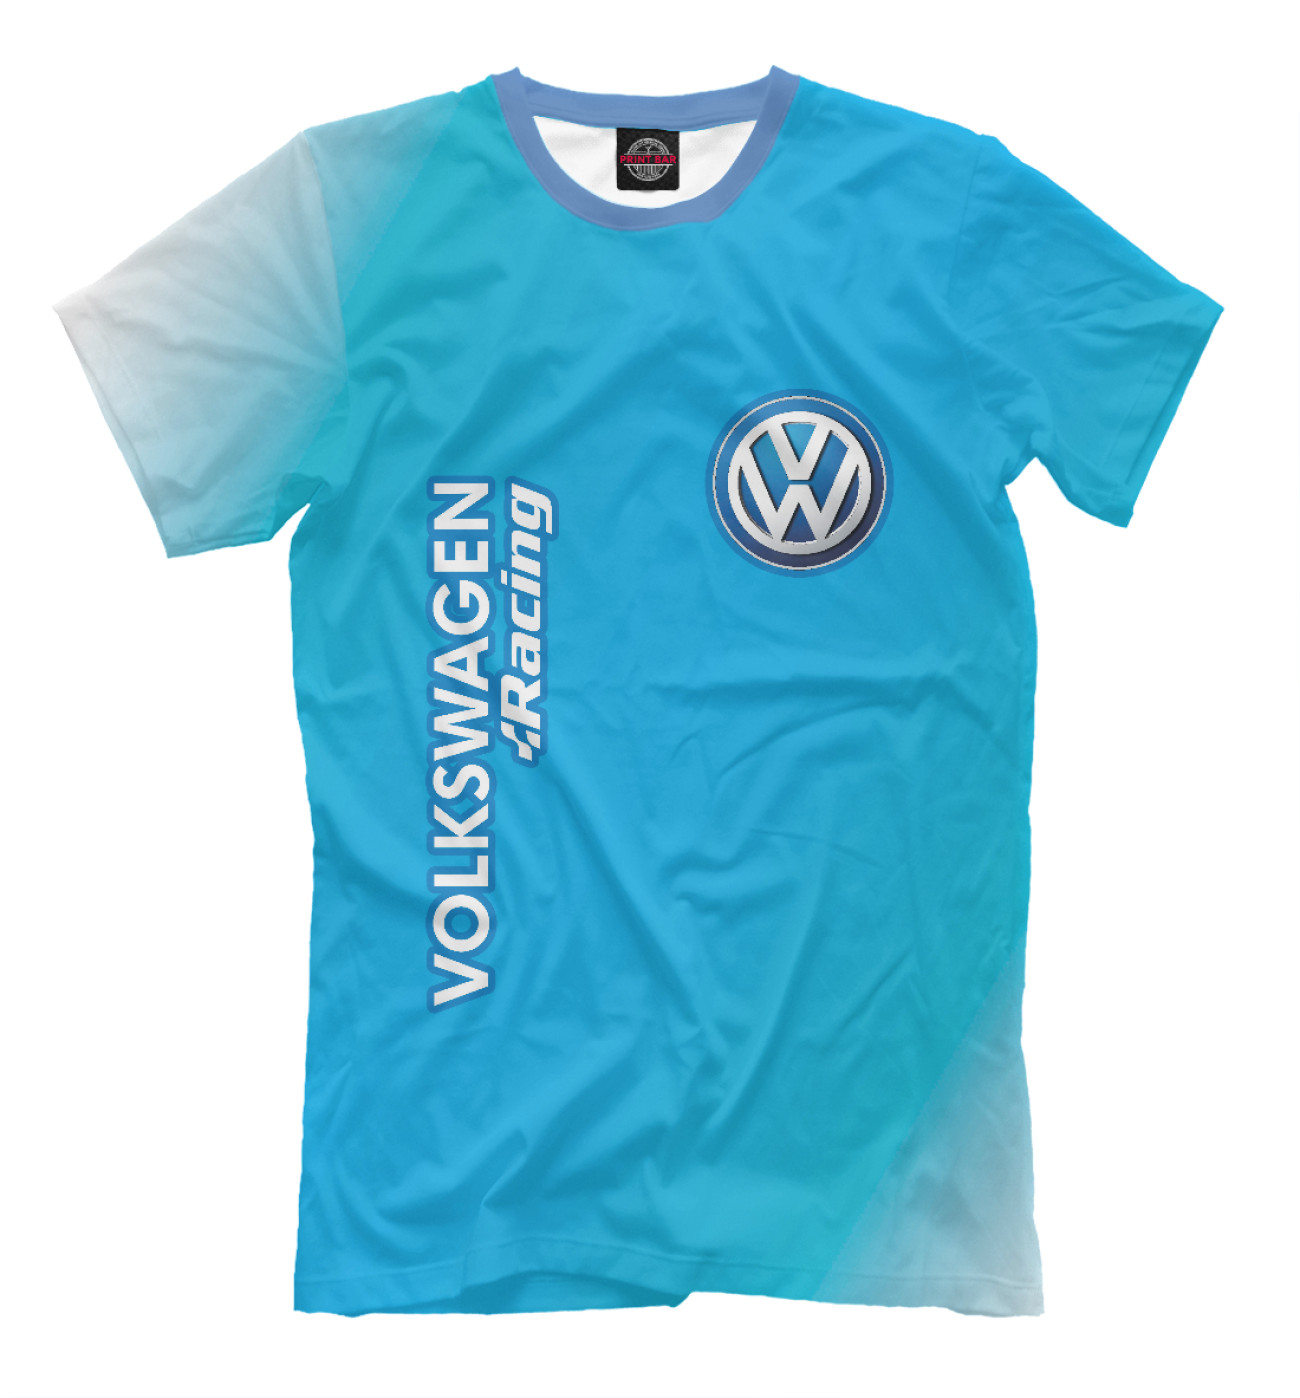 Мужская Футболка Volkswagen Racing, артикул: VWG-575420-fut-2